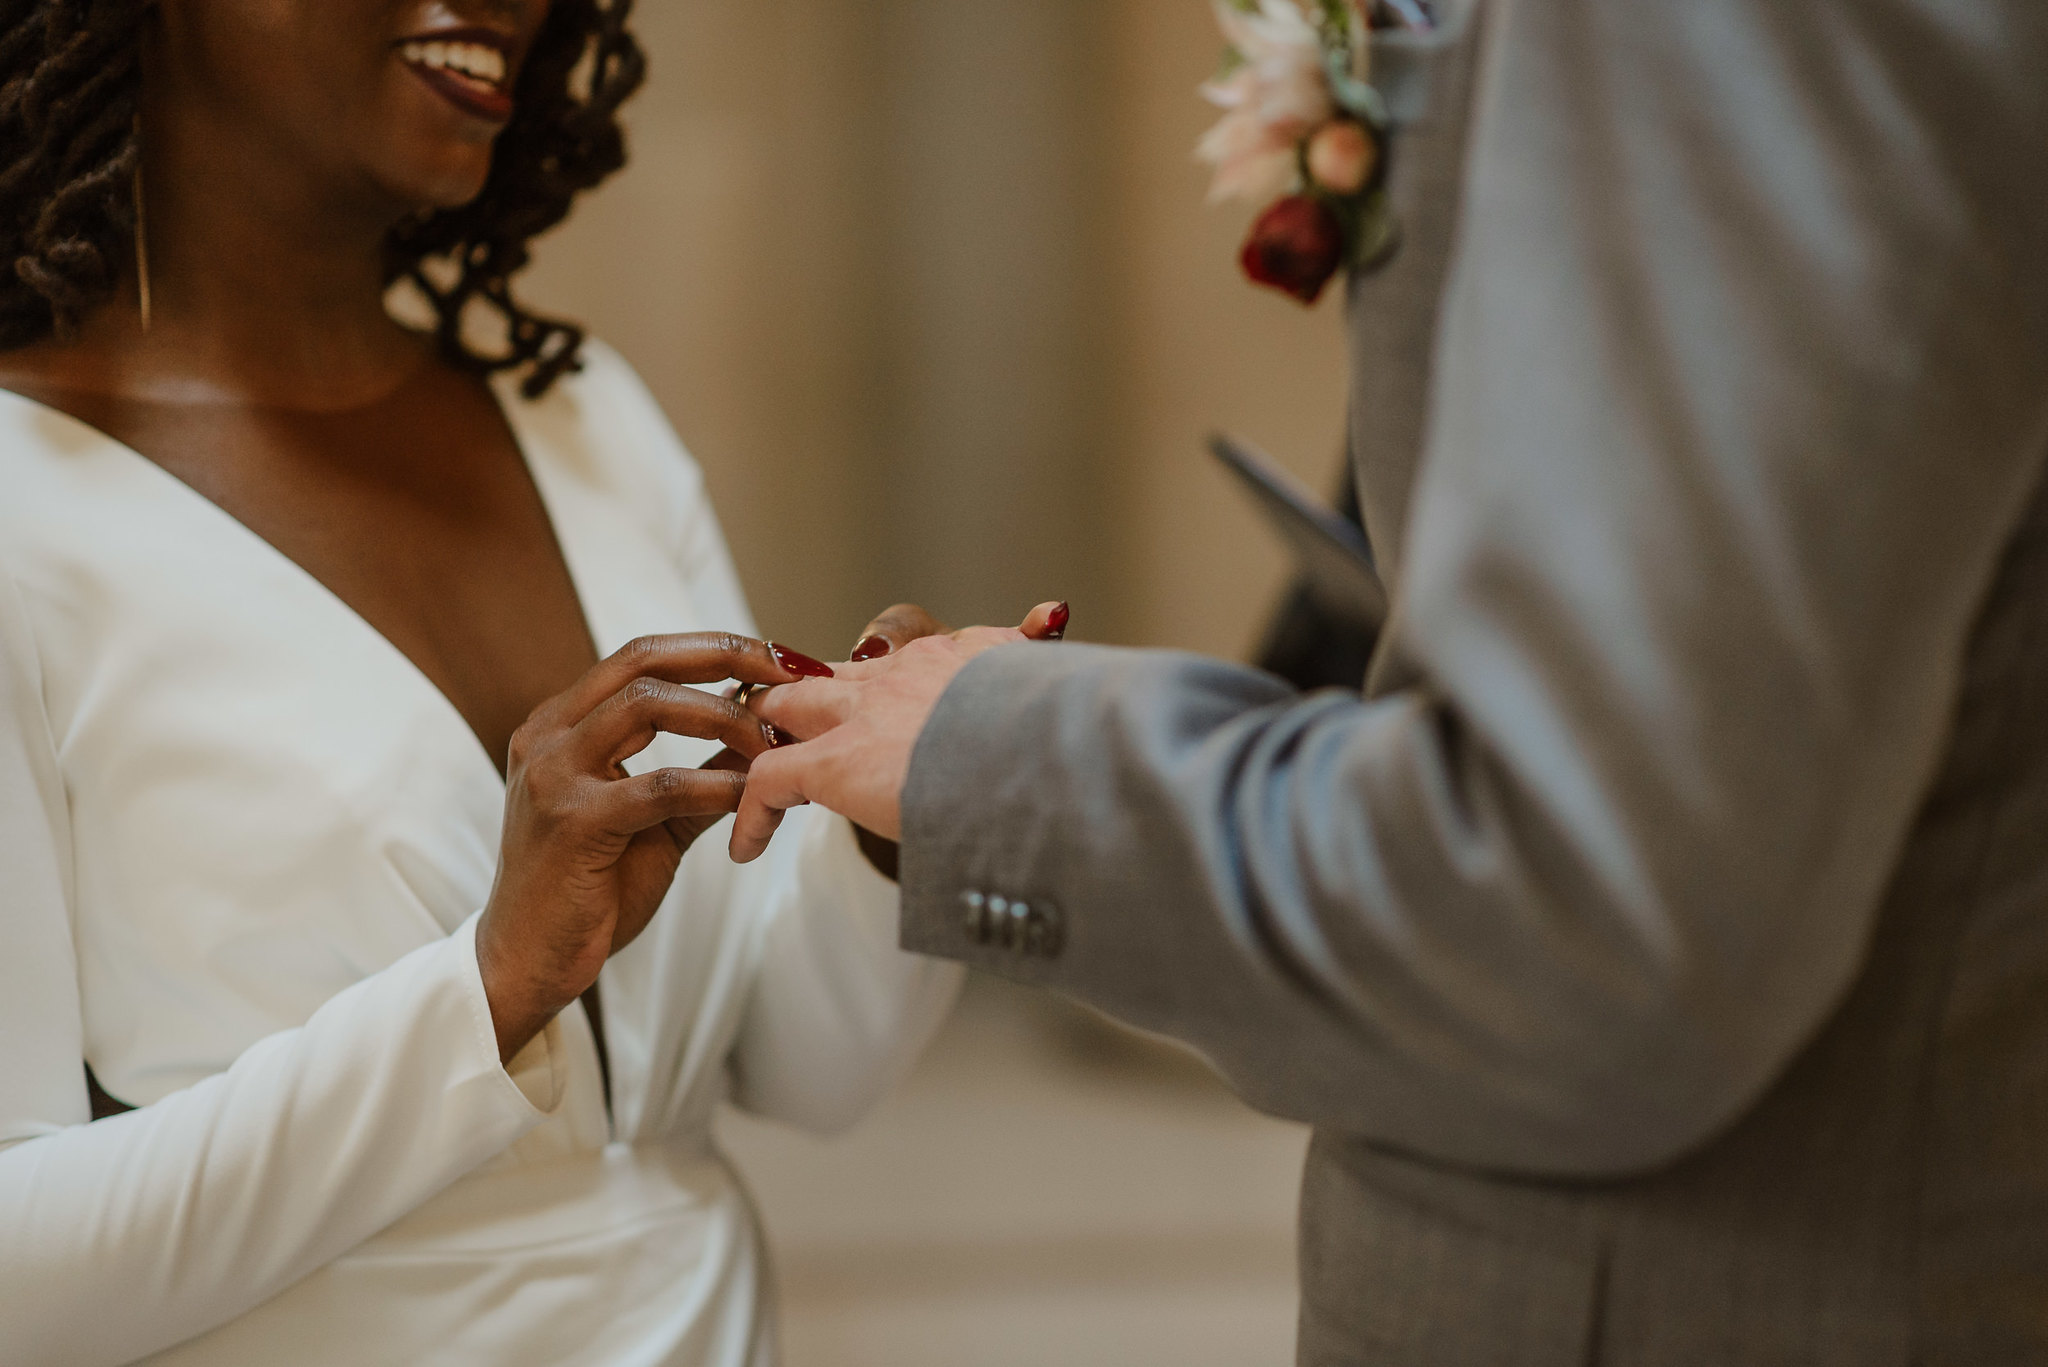 Woman in white dress placing ring on partner's [...]					</p></noscript>
</div>
</div>
</div>
</a>
</div>
</div><div class=